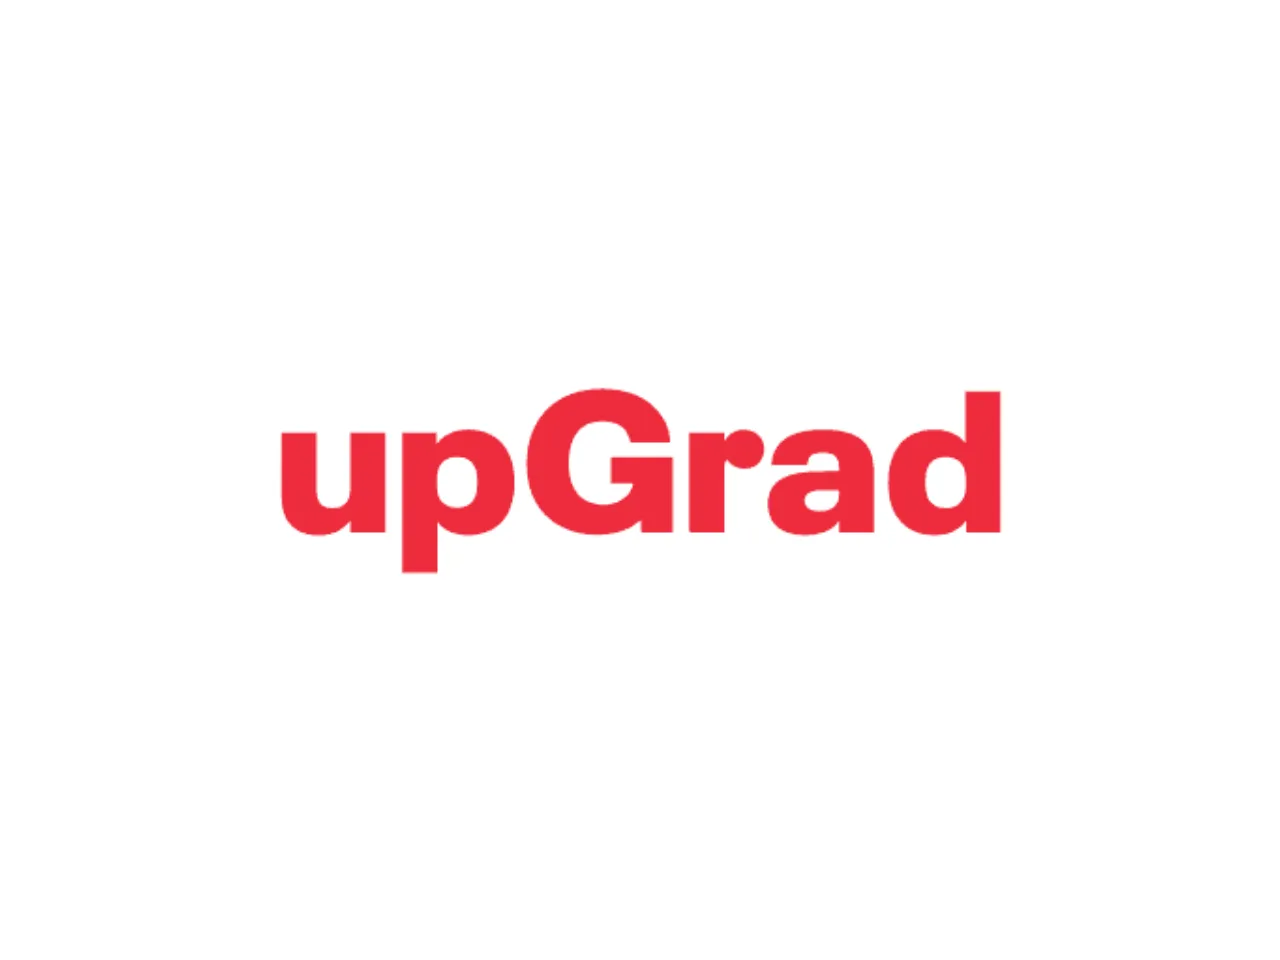 Edtech Unicorn upGrad Explores Acquisition of Udacity, a Declining Edtech Firm